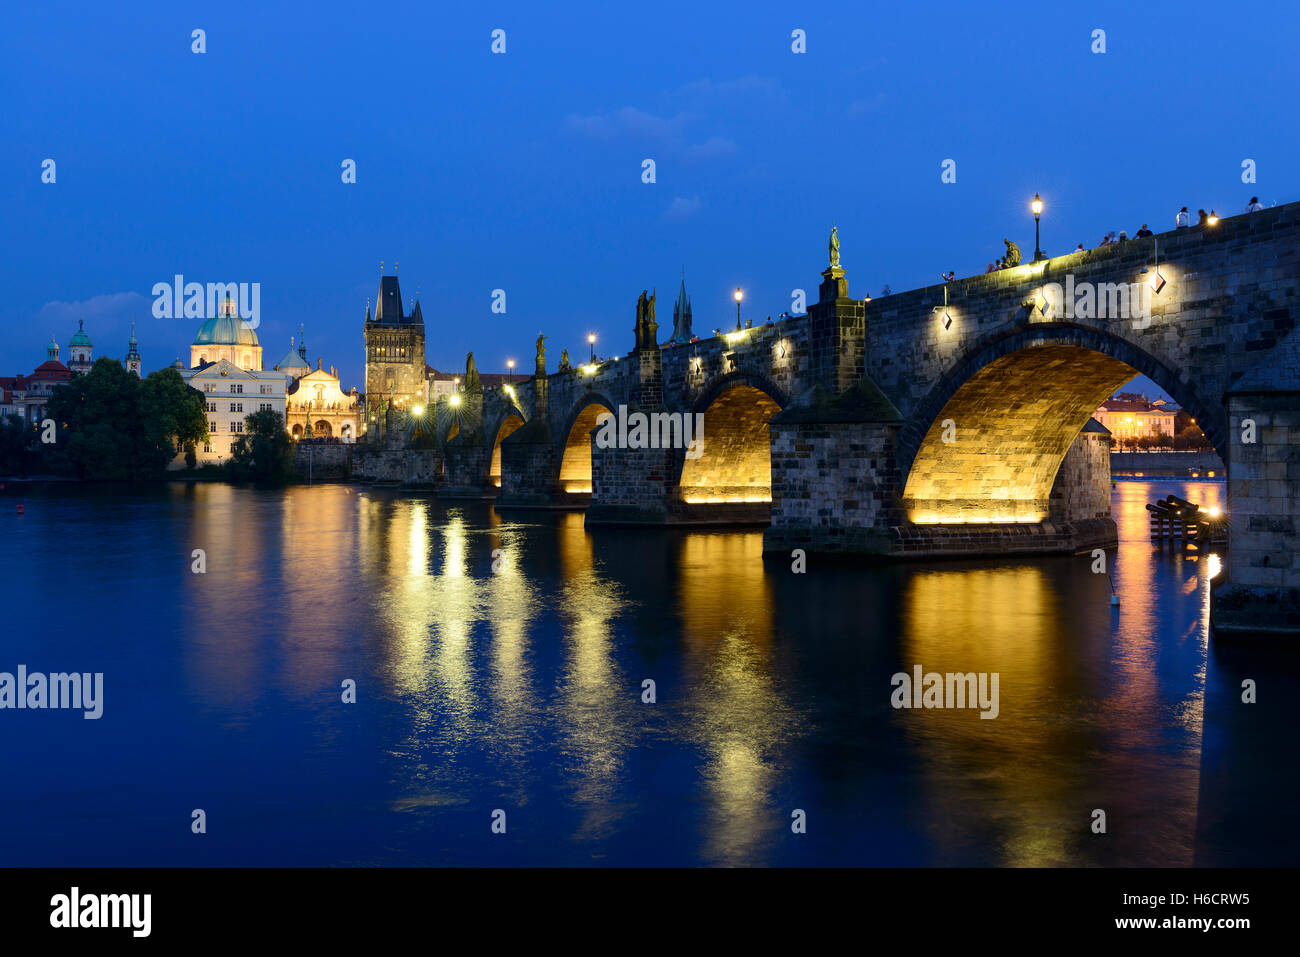 Charles Bridge, Vltava River, St. Francis Church, Old Town Bridge Tower, Prague, Czech Republic Stock Photo